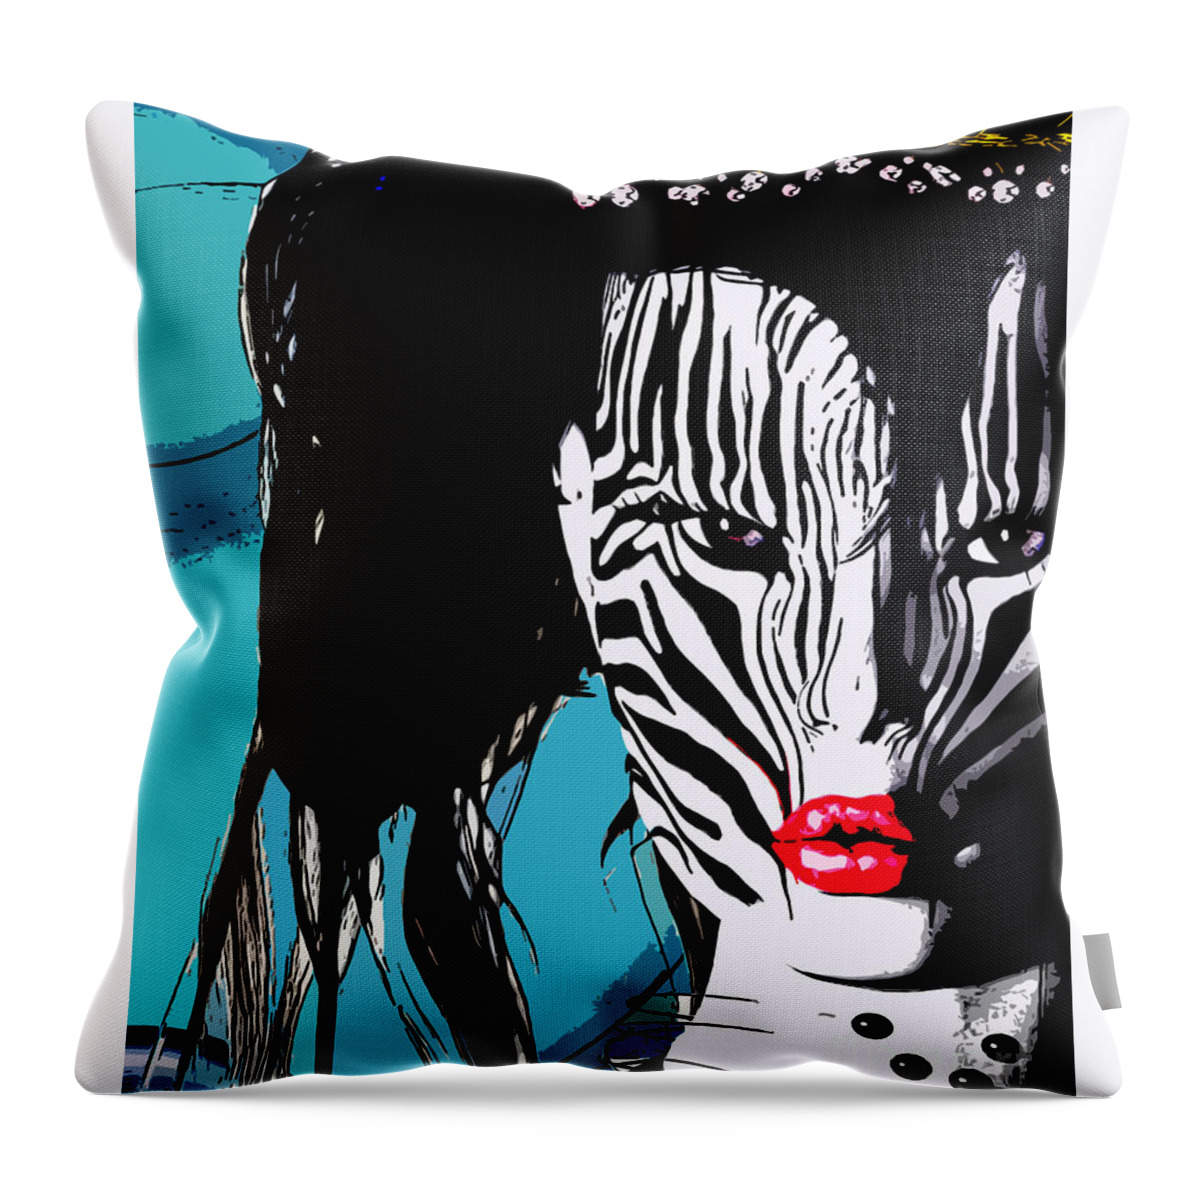 Zebra Throw Pillow featuring the digital art Zebra Girl Pop Art by Alicia Hollinger